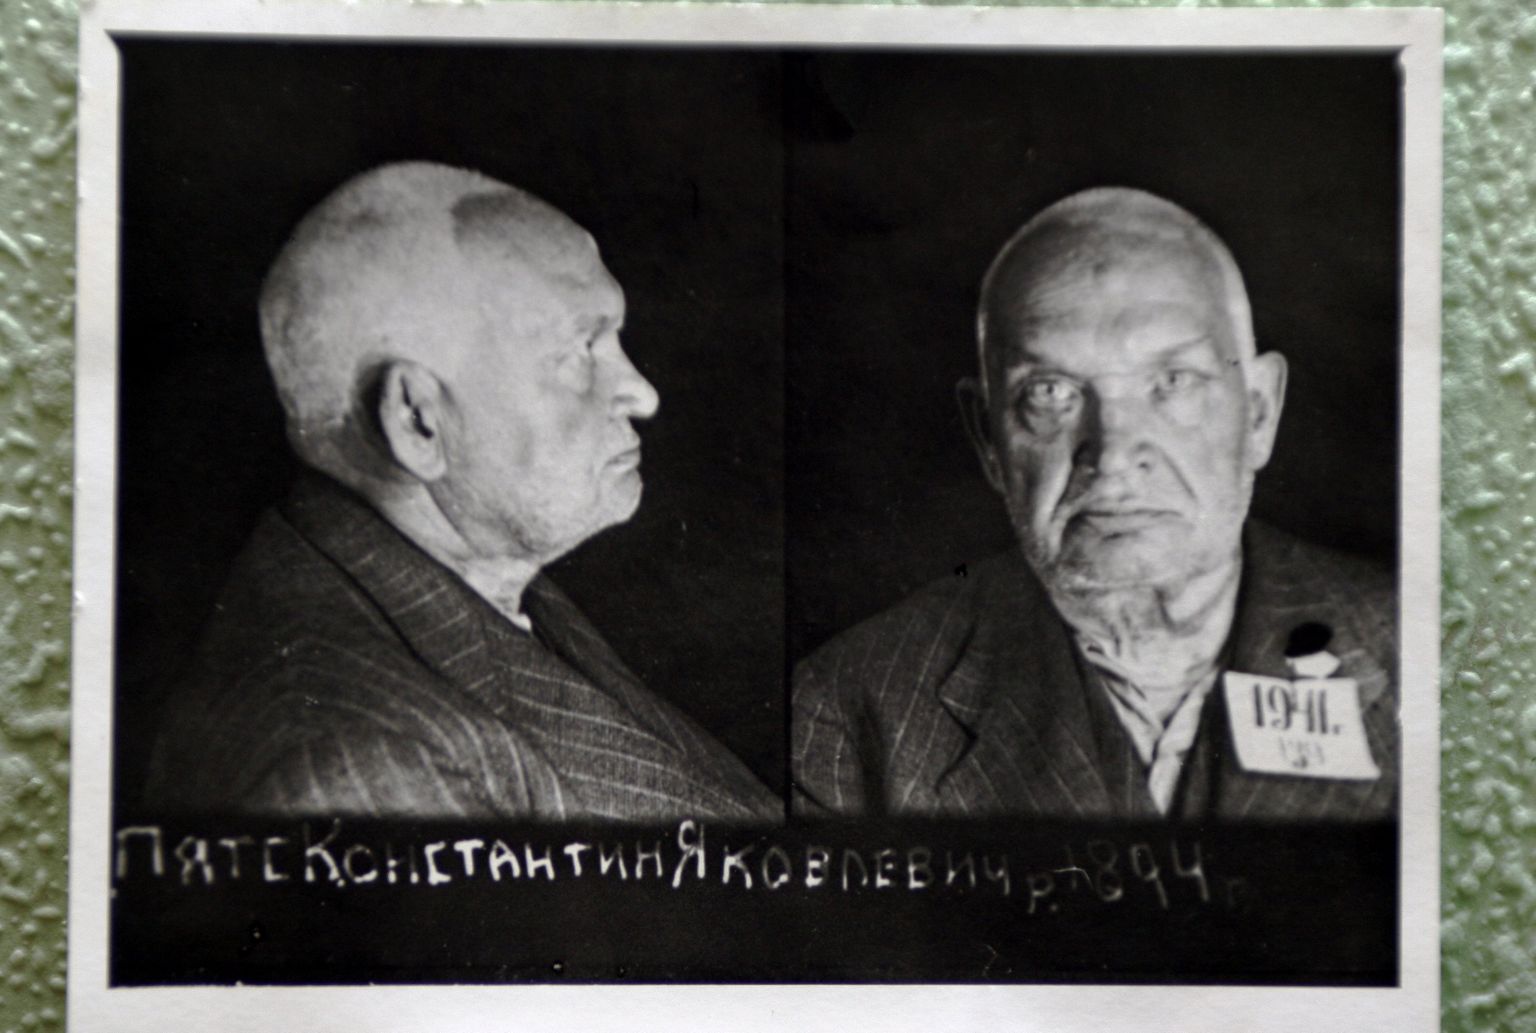 Repro kinnipeetud Konstantin Pätsi fotost tema arreteerimistoimikust.